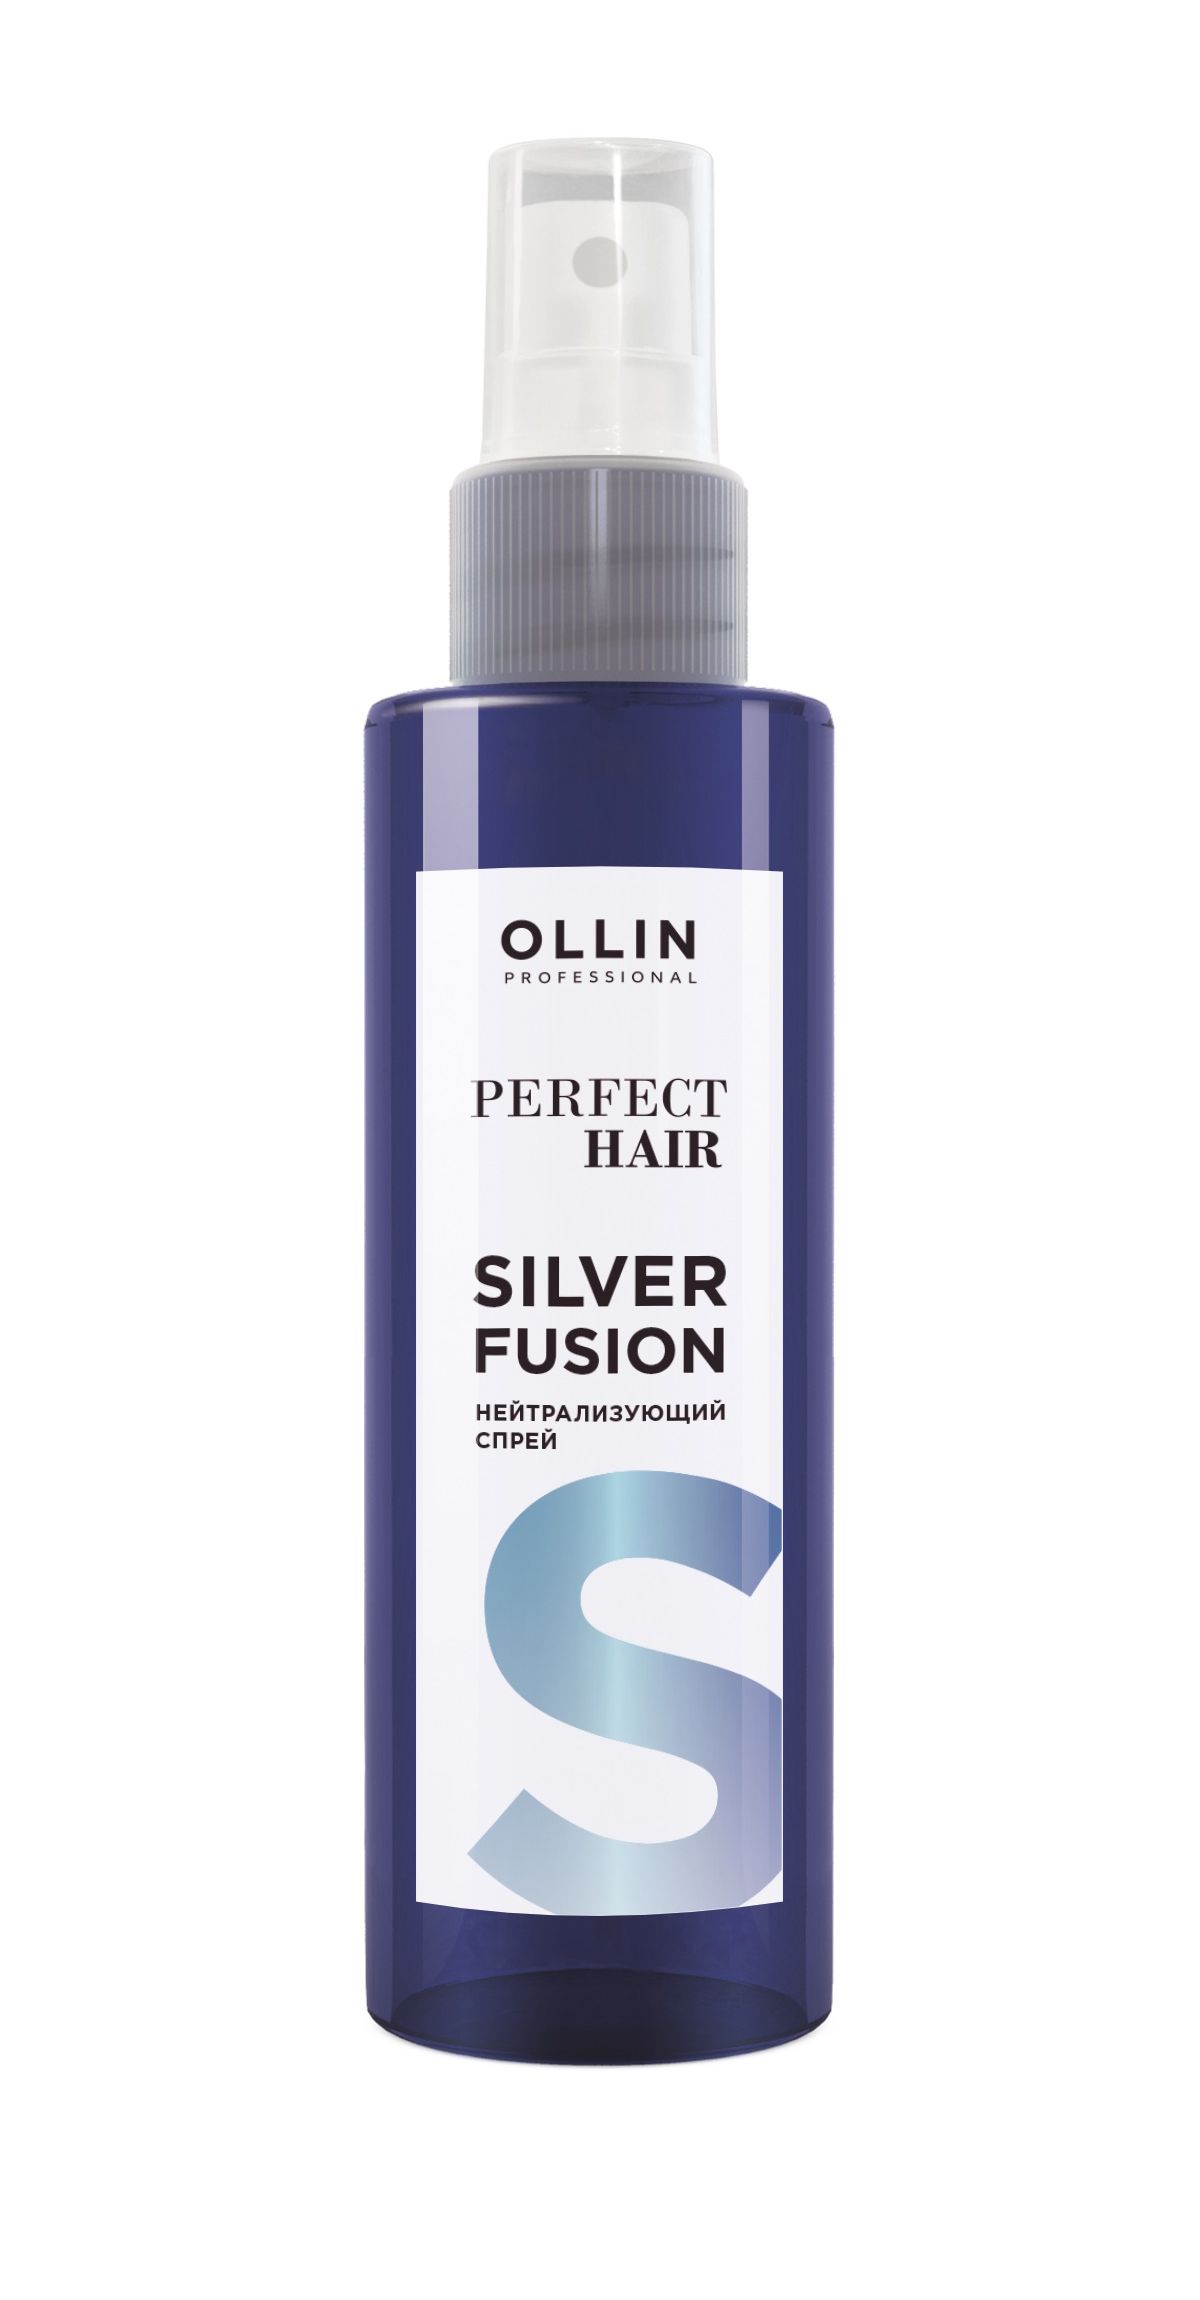 Ollin, Нейтрализующий спрей для волос «Silver Fusion» серии «Perfect Hair», Фото интернет-магазин Премиум-Косметика.РФ